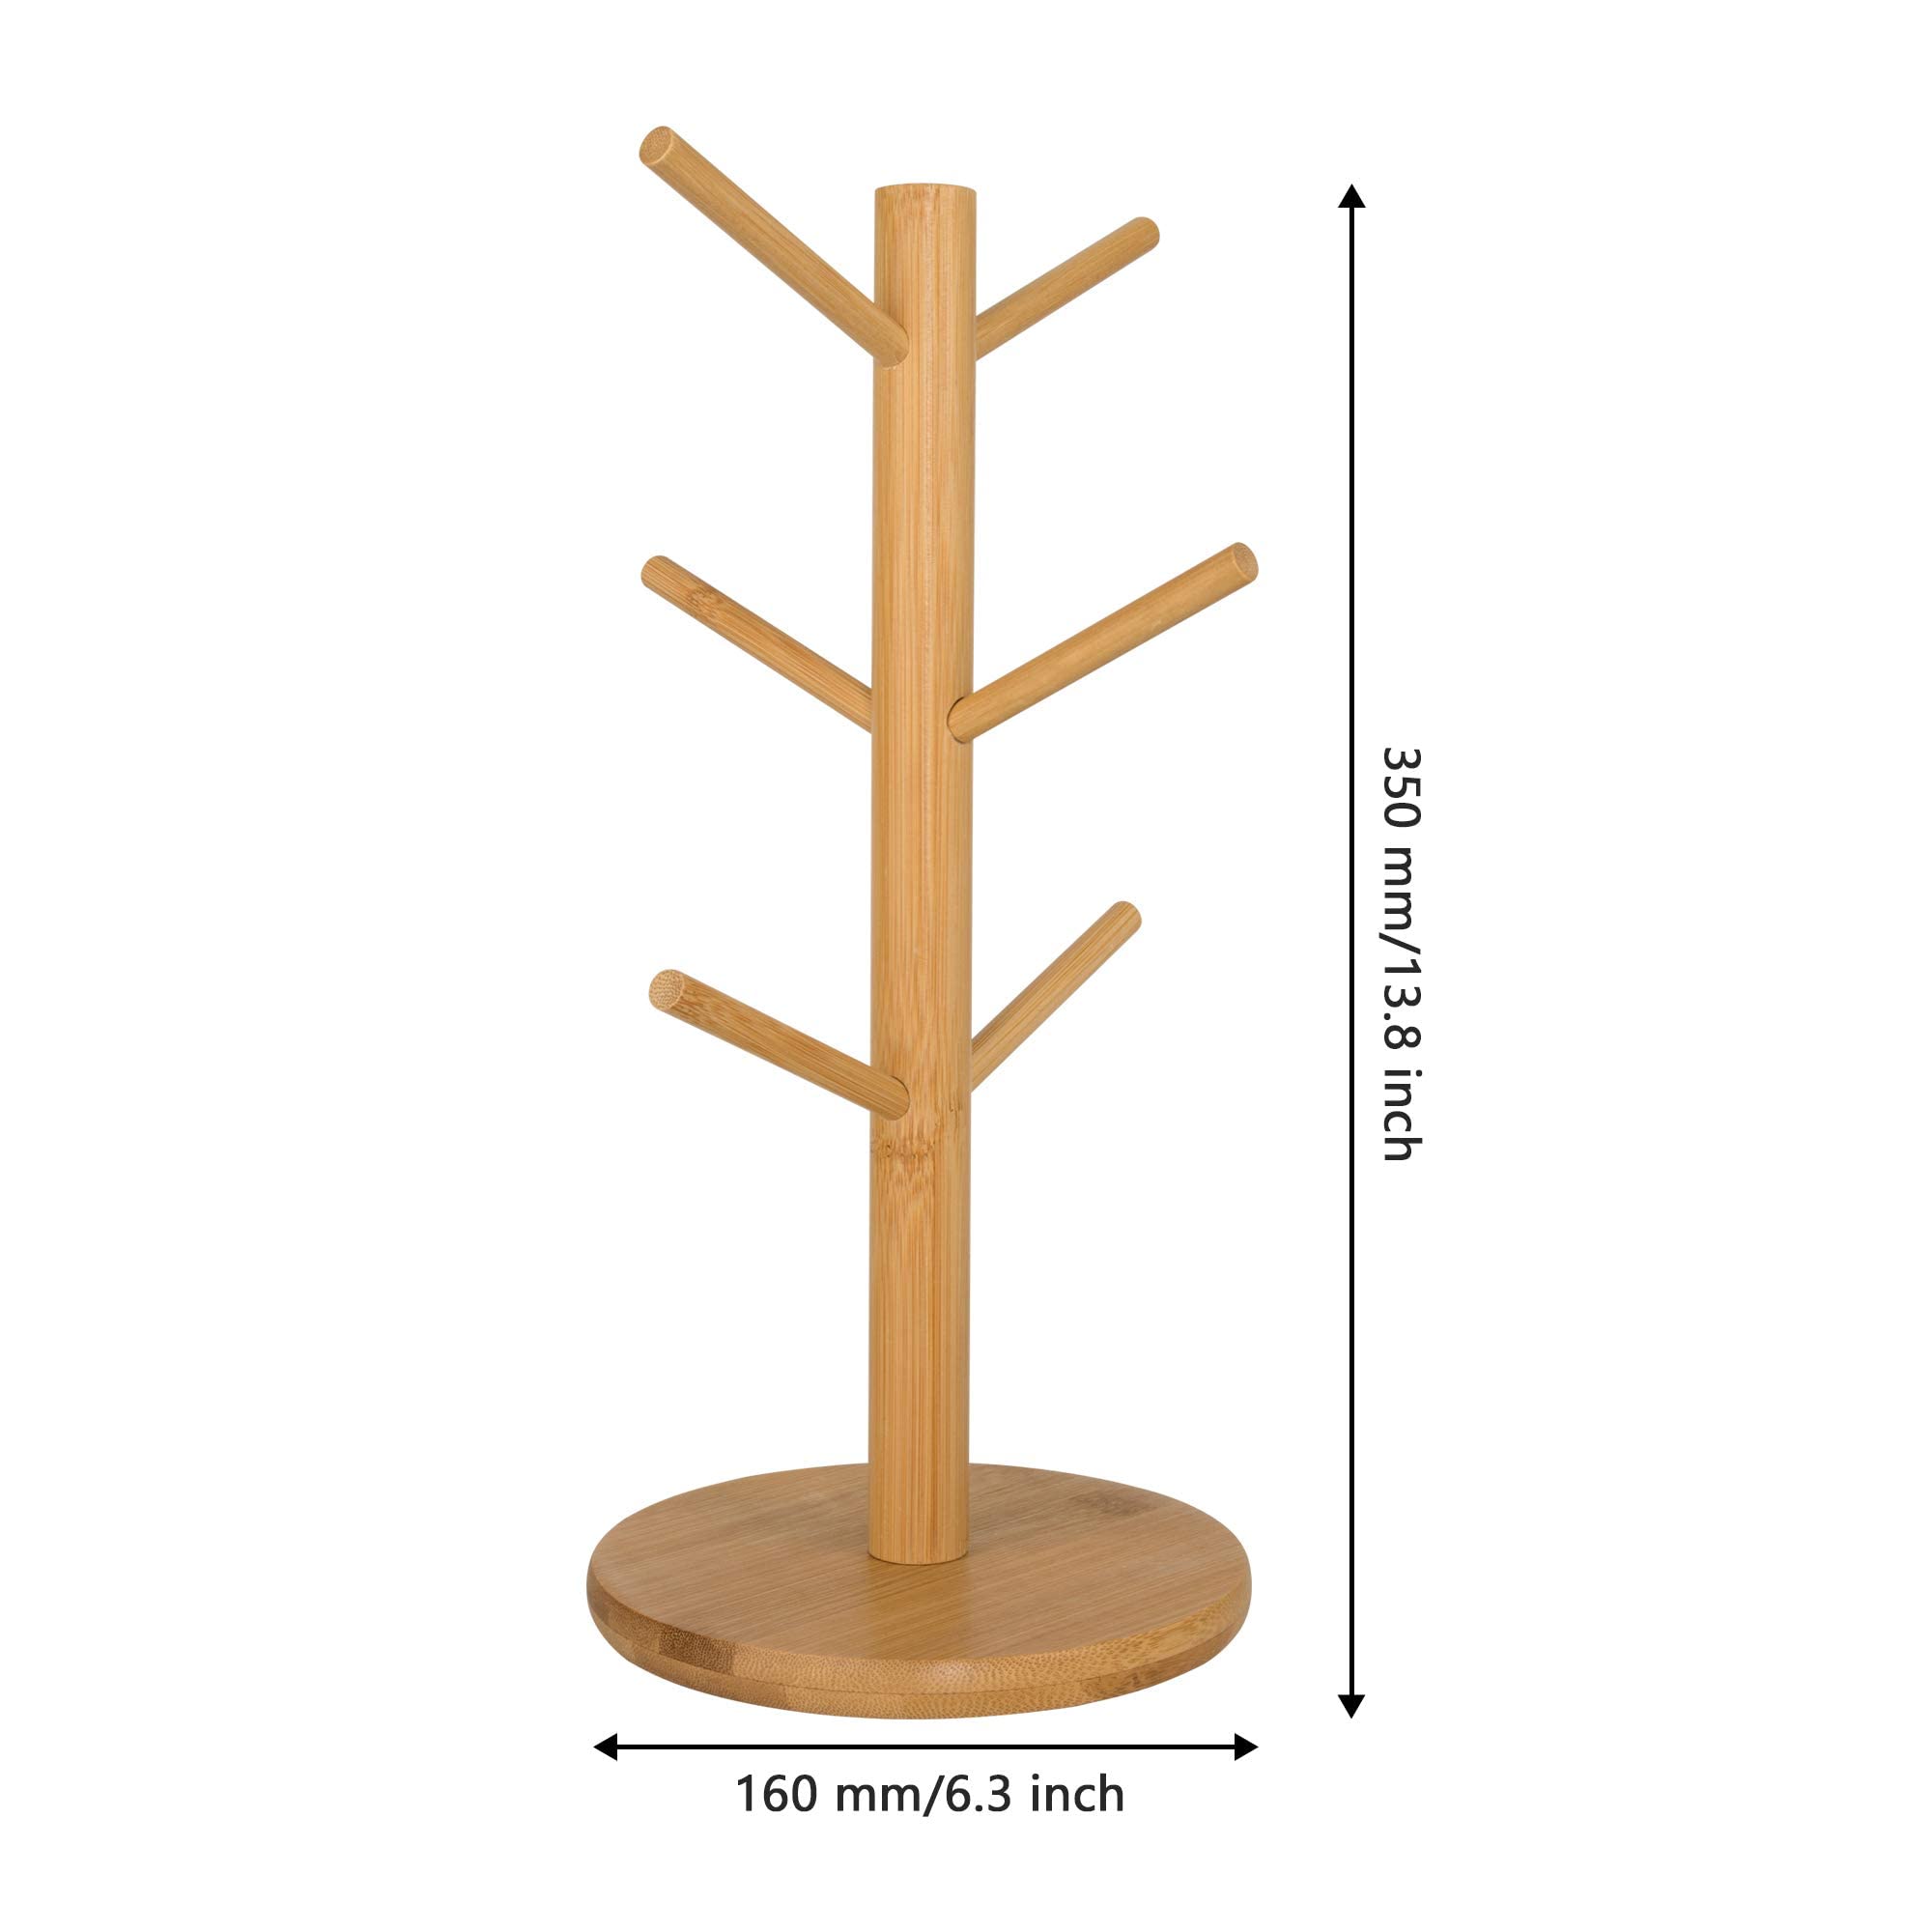 VIO Mug Rack Tree, Organic Bamboo Mug Holder/Stand, Mug Hook, Storage Coffee Tea Cup Organizer Hanger Holder with 6 Hooks (CIRCLE)